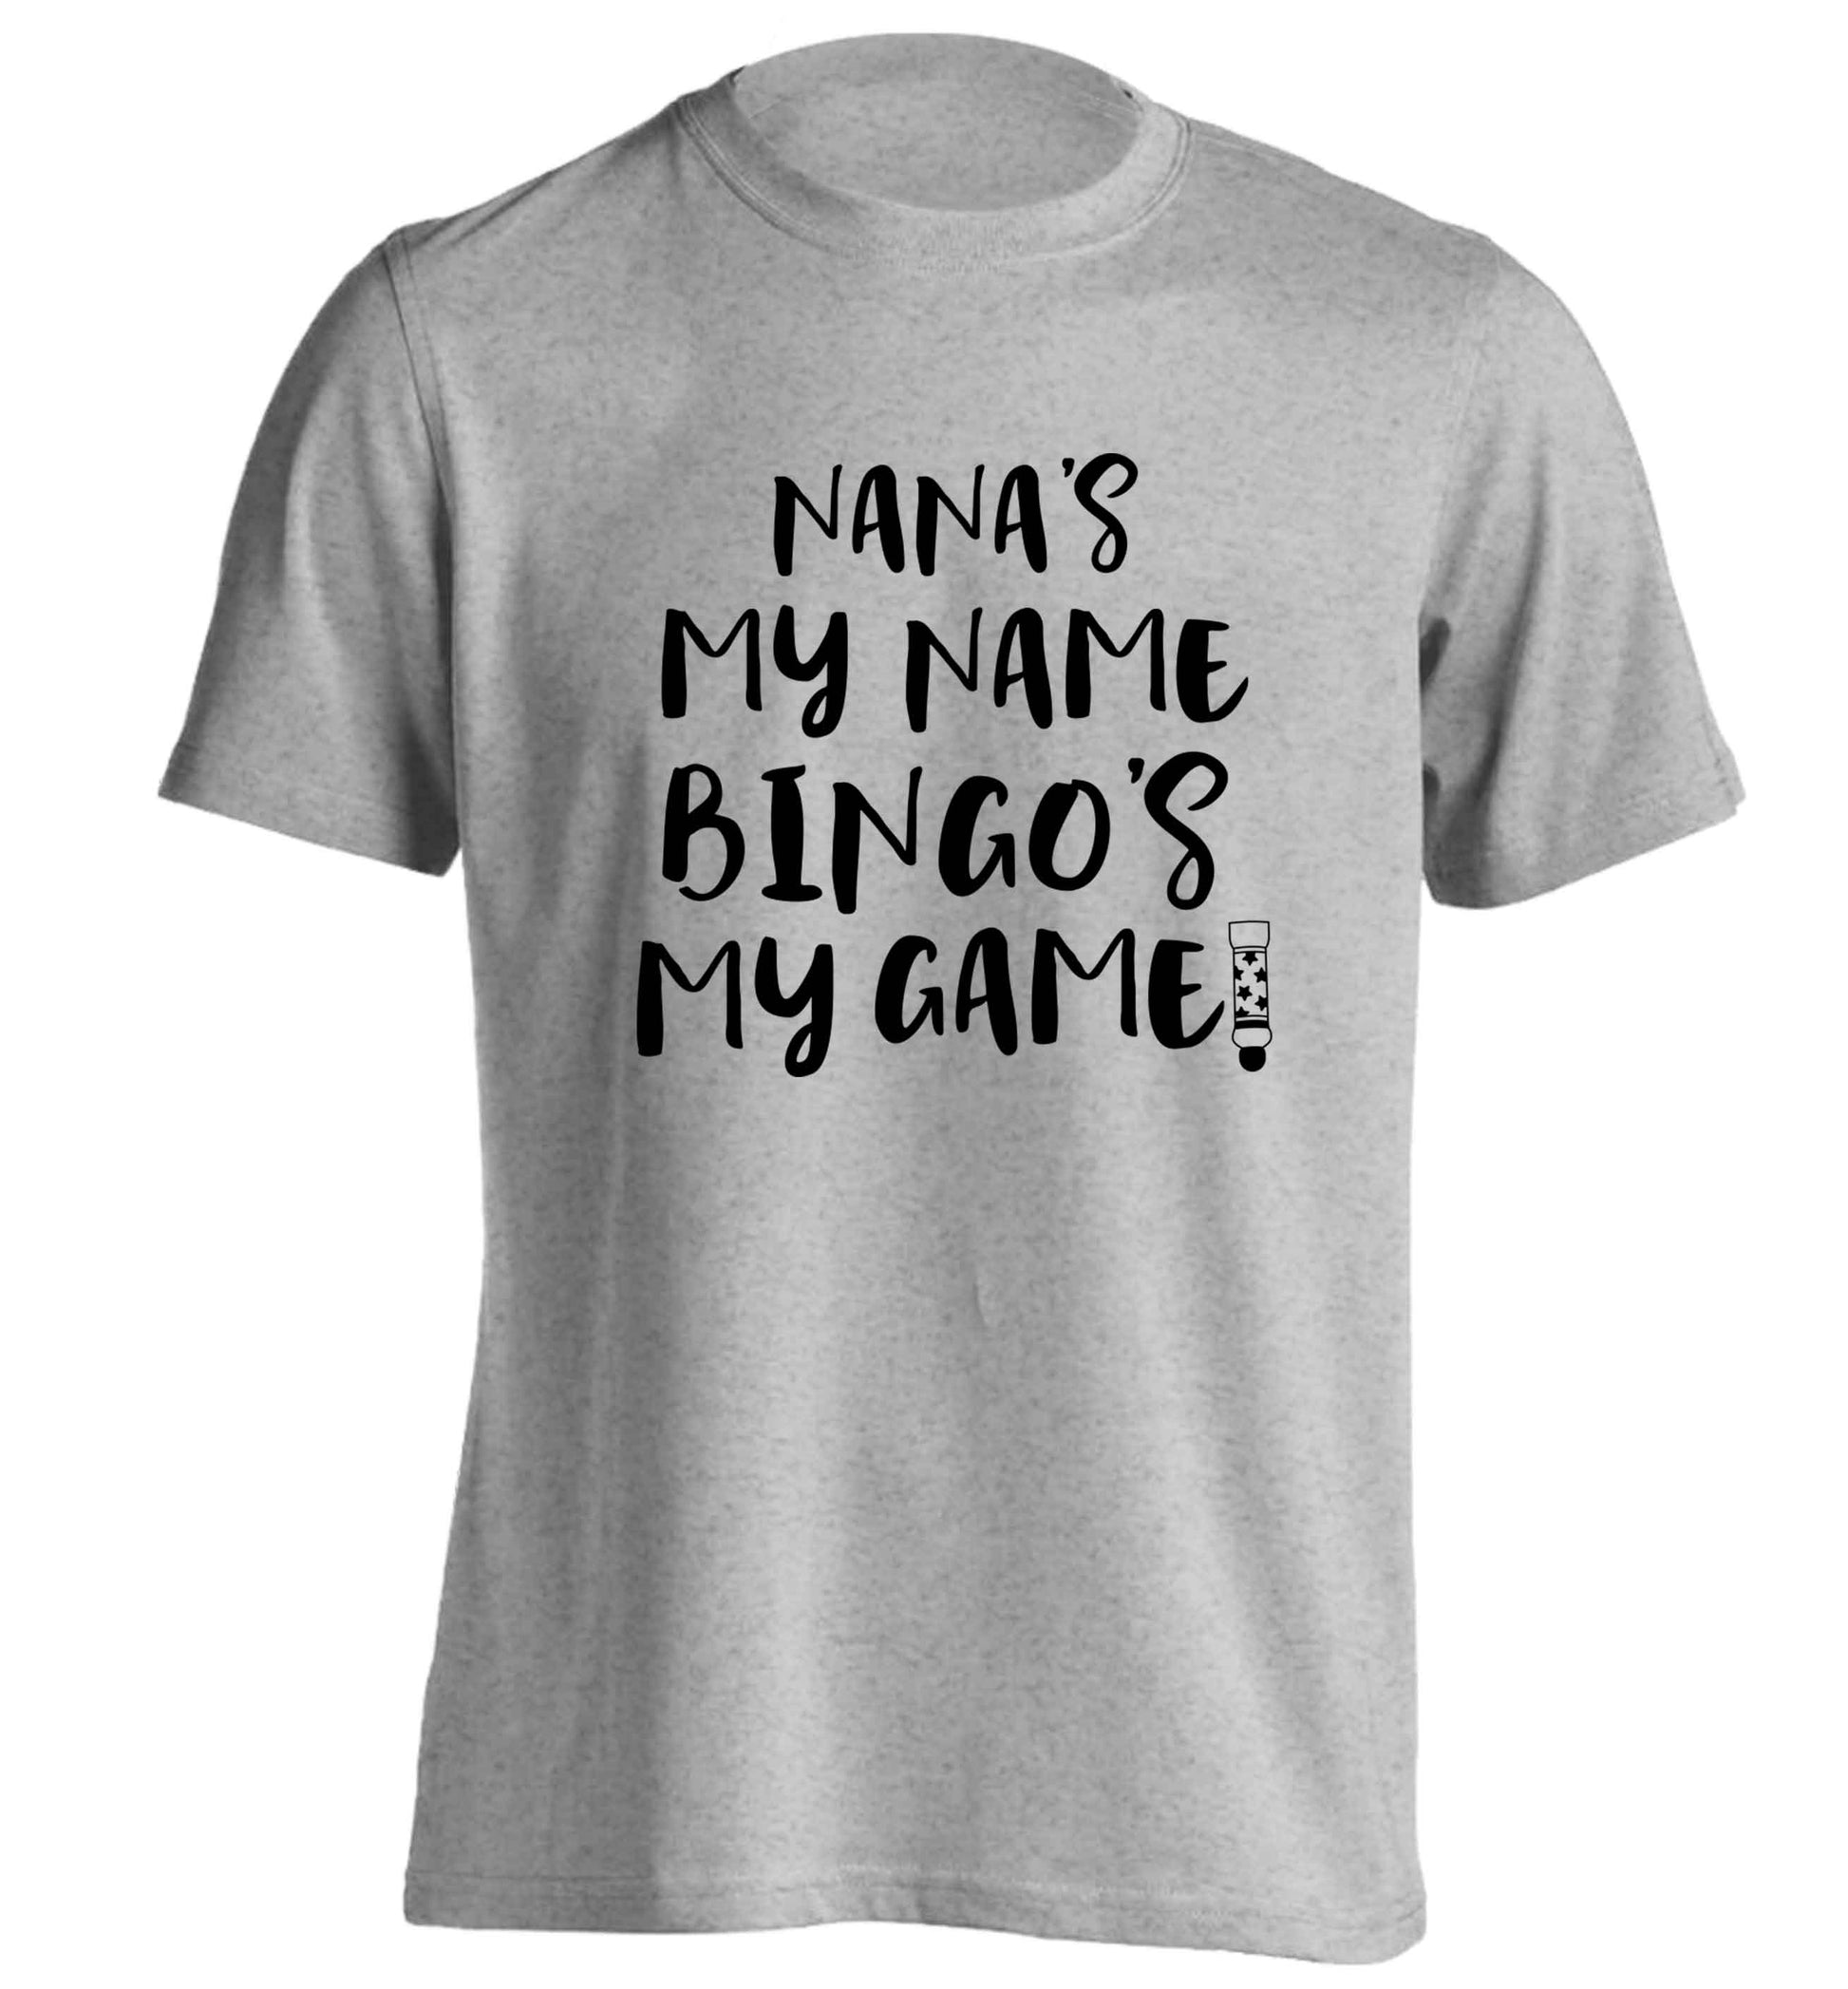 Nana's my name bingo's my game! adults unisex grey Tshirt 2XL